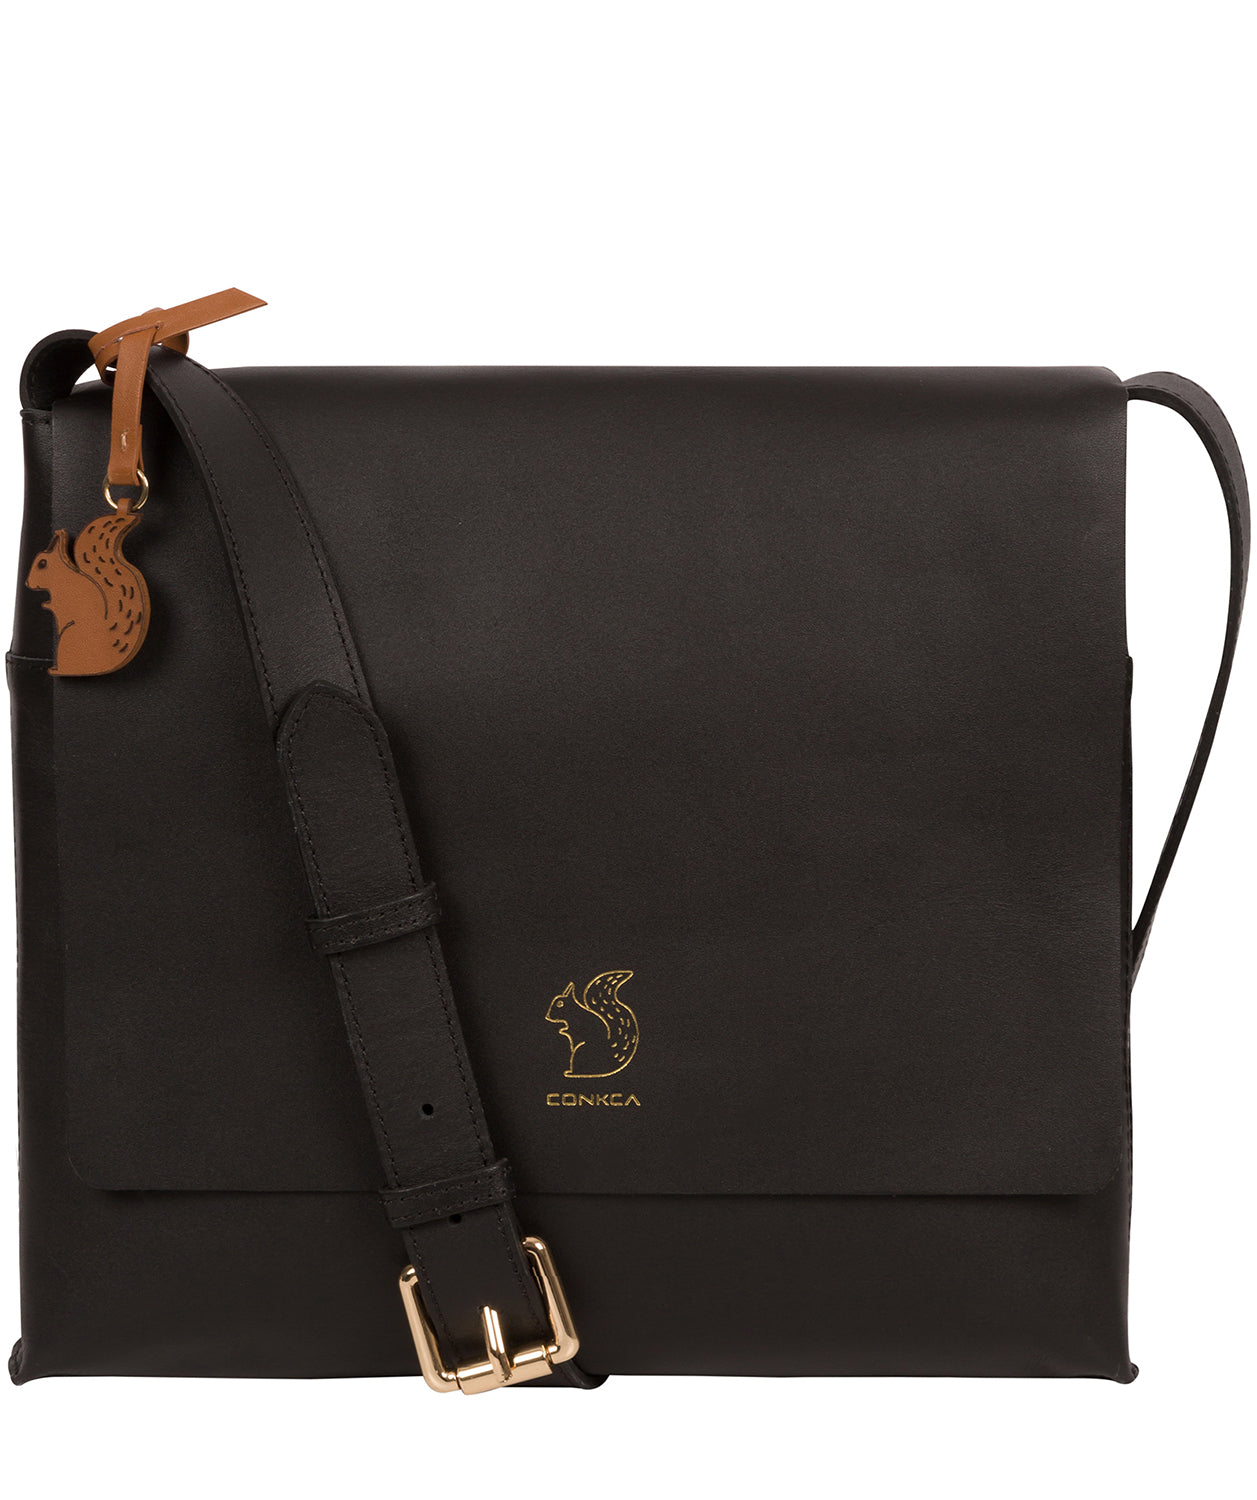 Bags, Gorgeous Jet Black Leather Shoulder Hand Bag